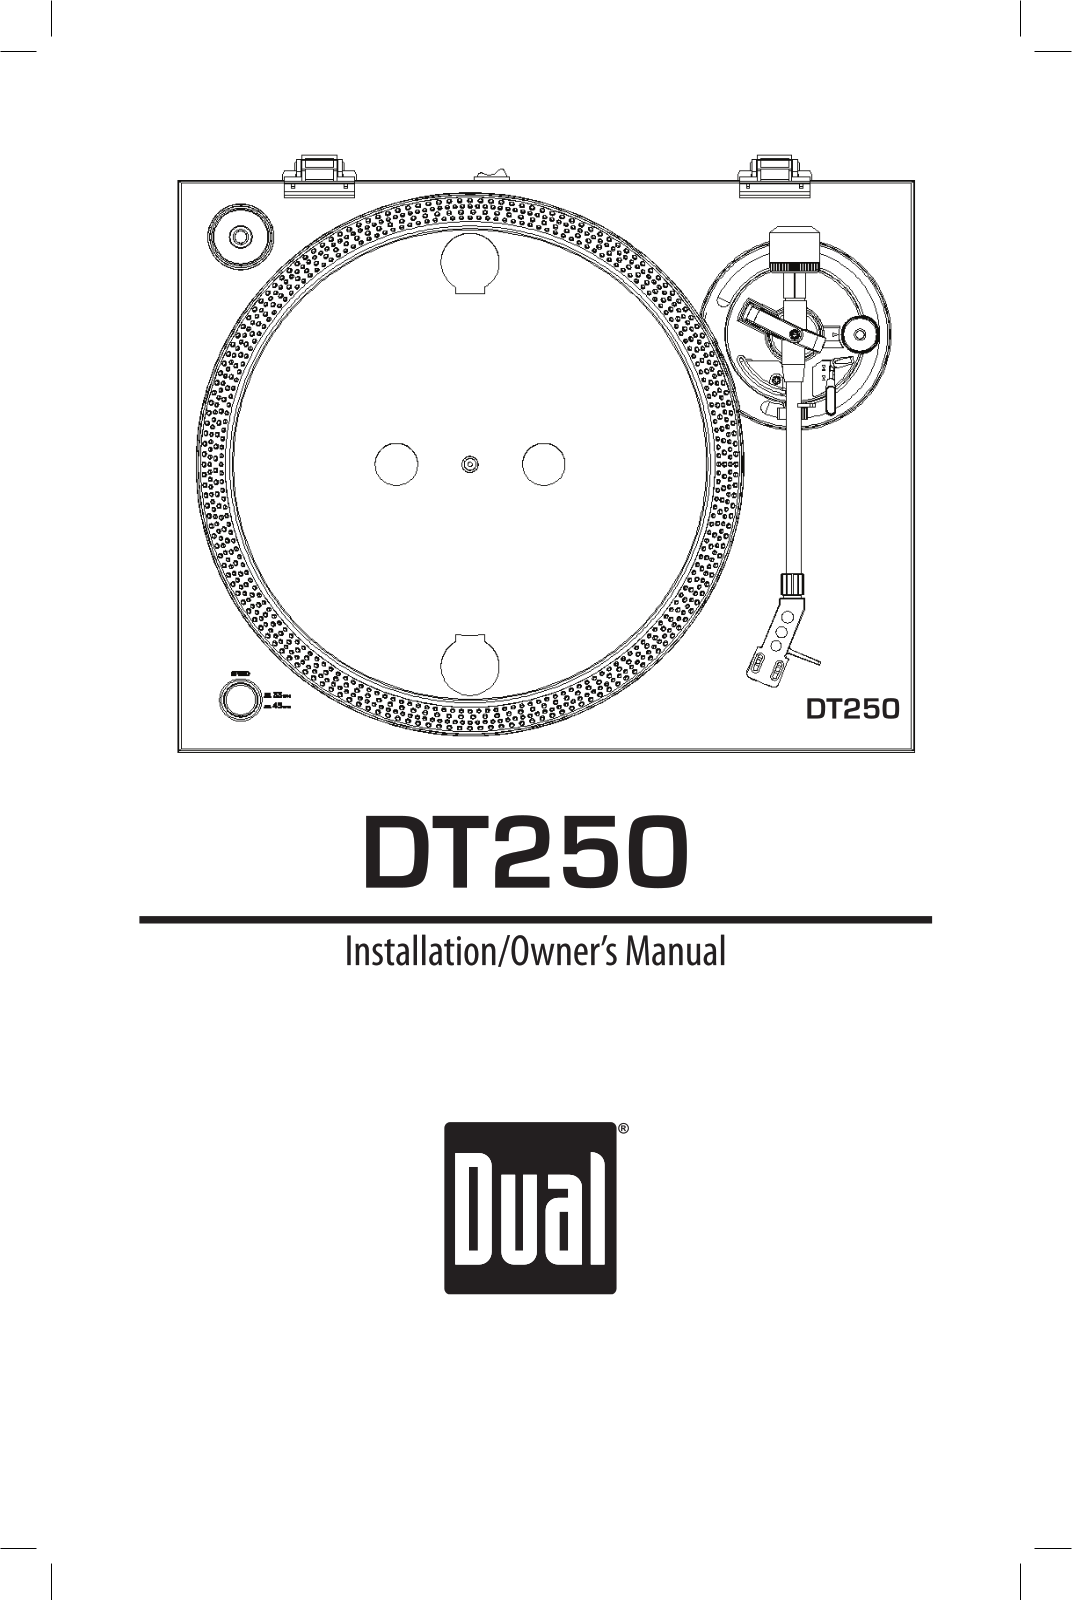 Dual DT250 Owner's Manual